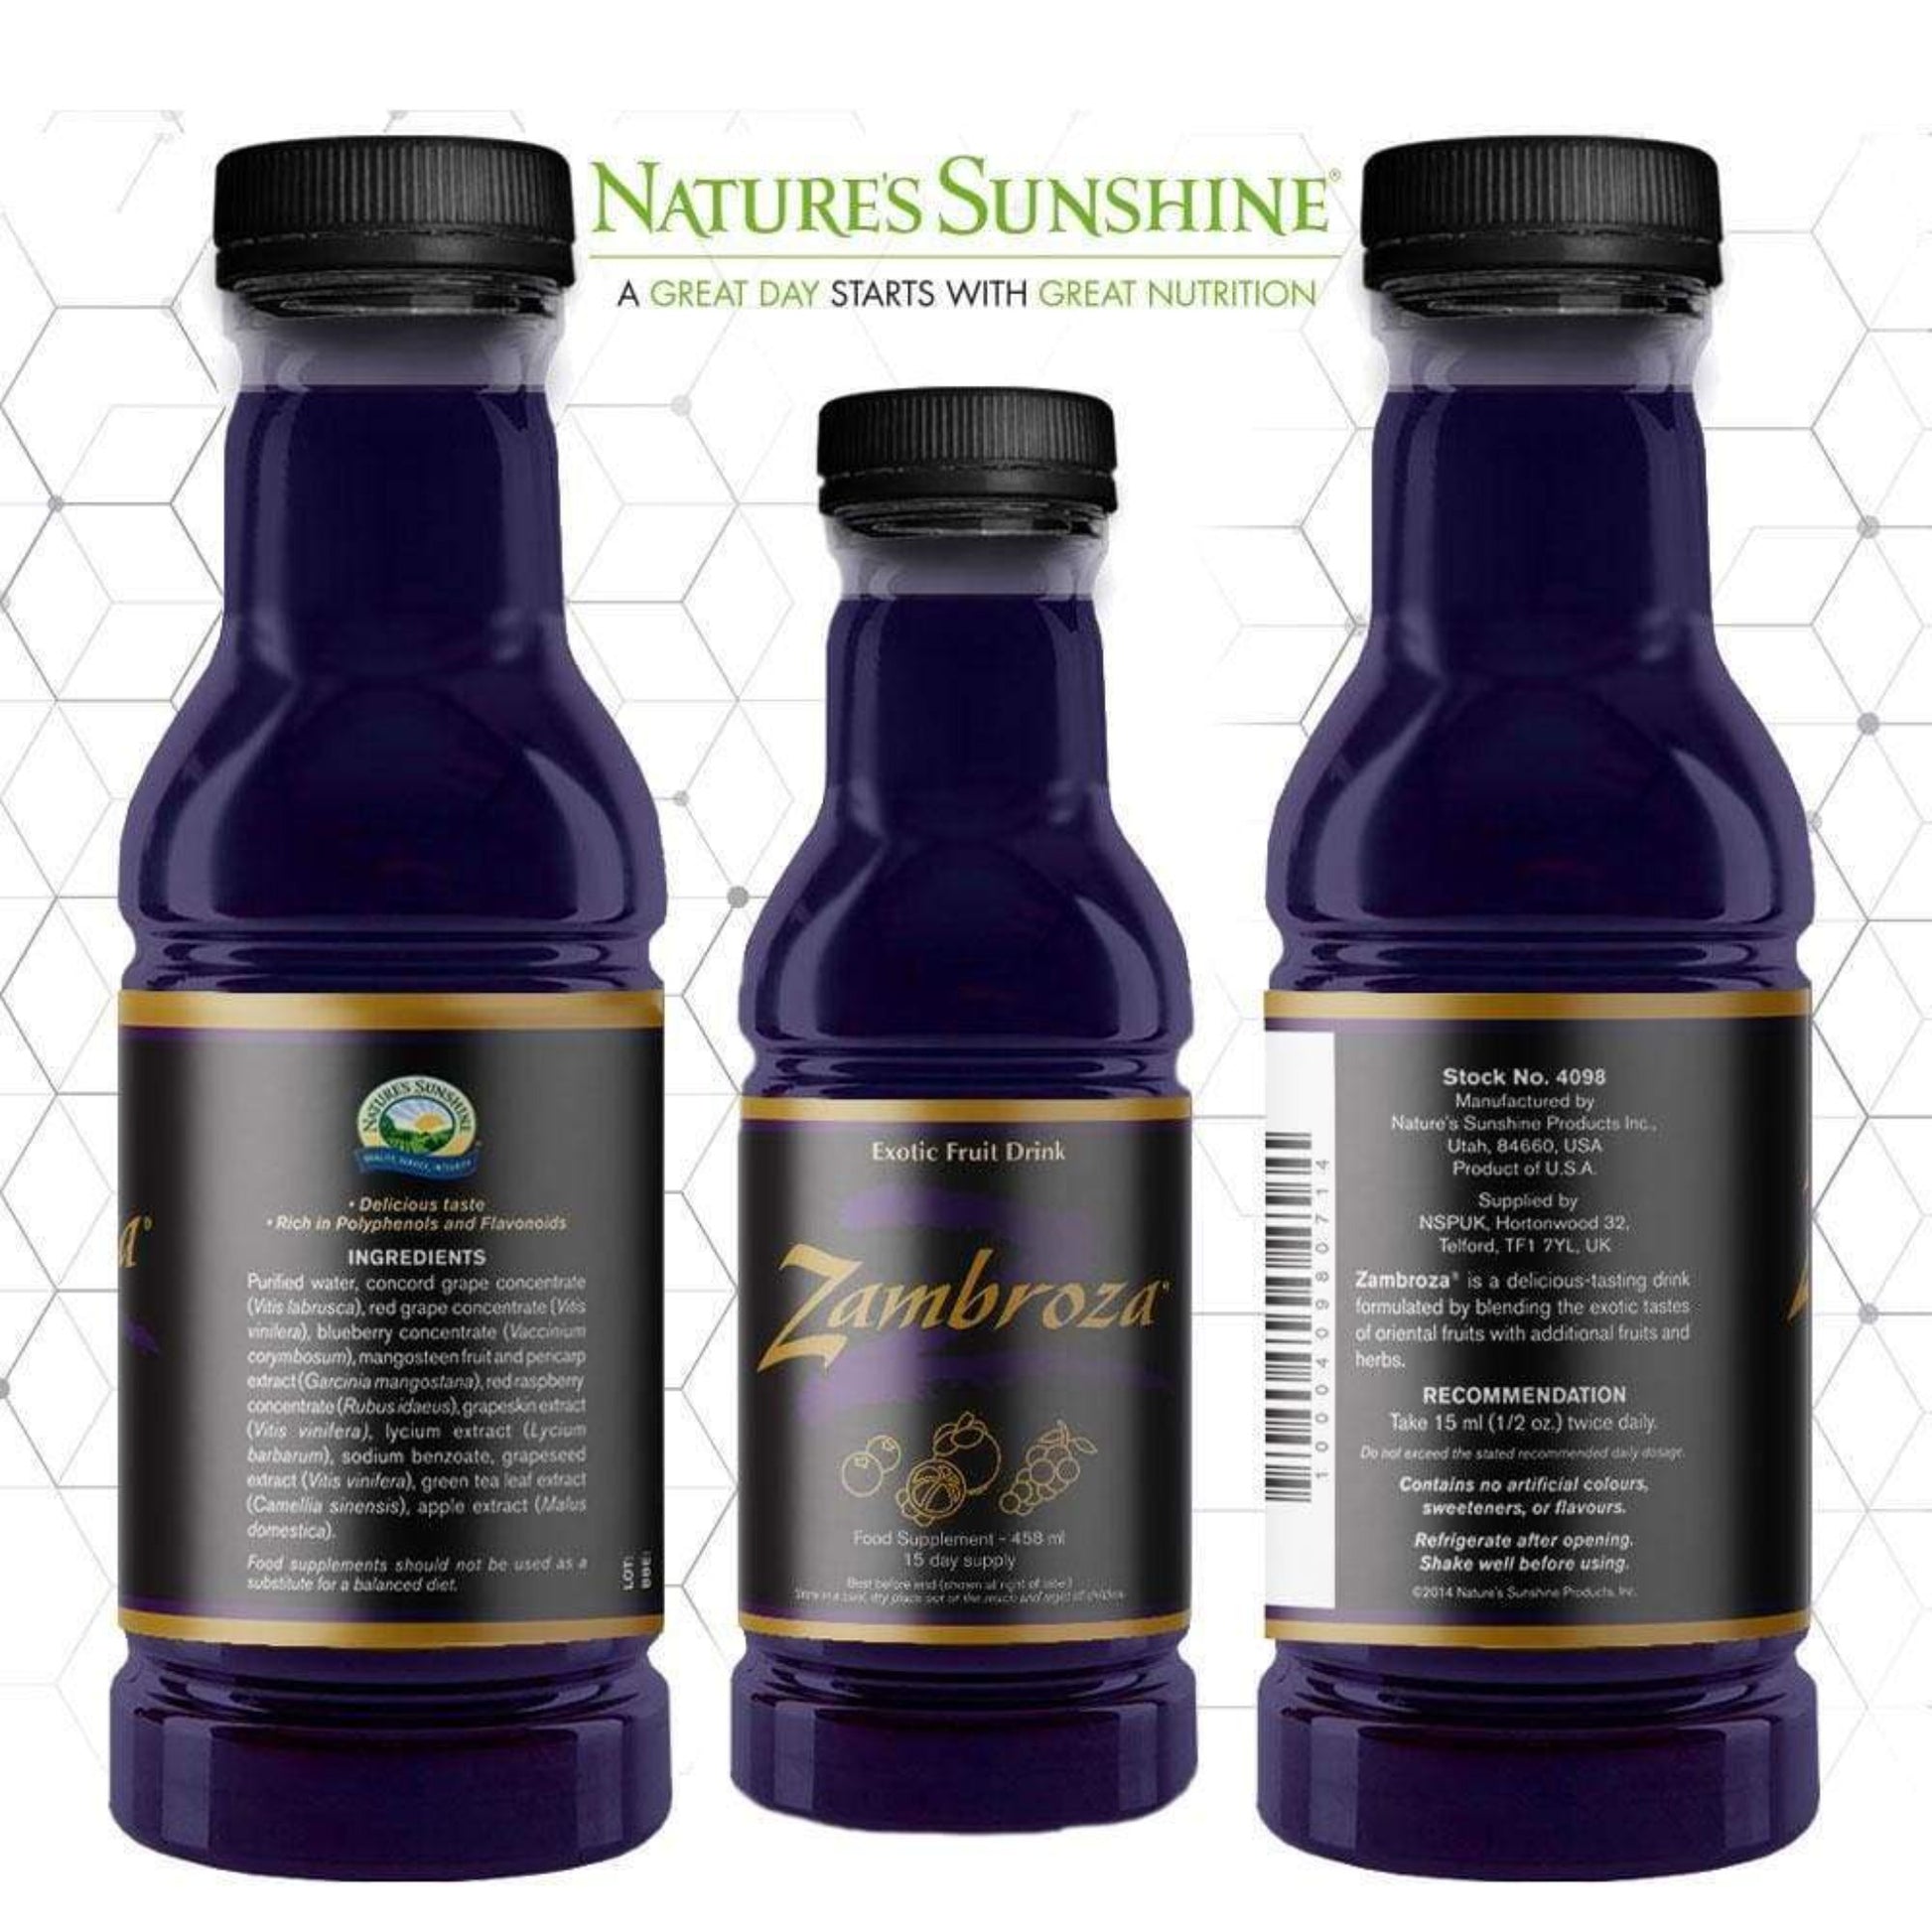 Zambroza® dietary supplement information by Nature's Sunshine